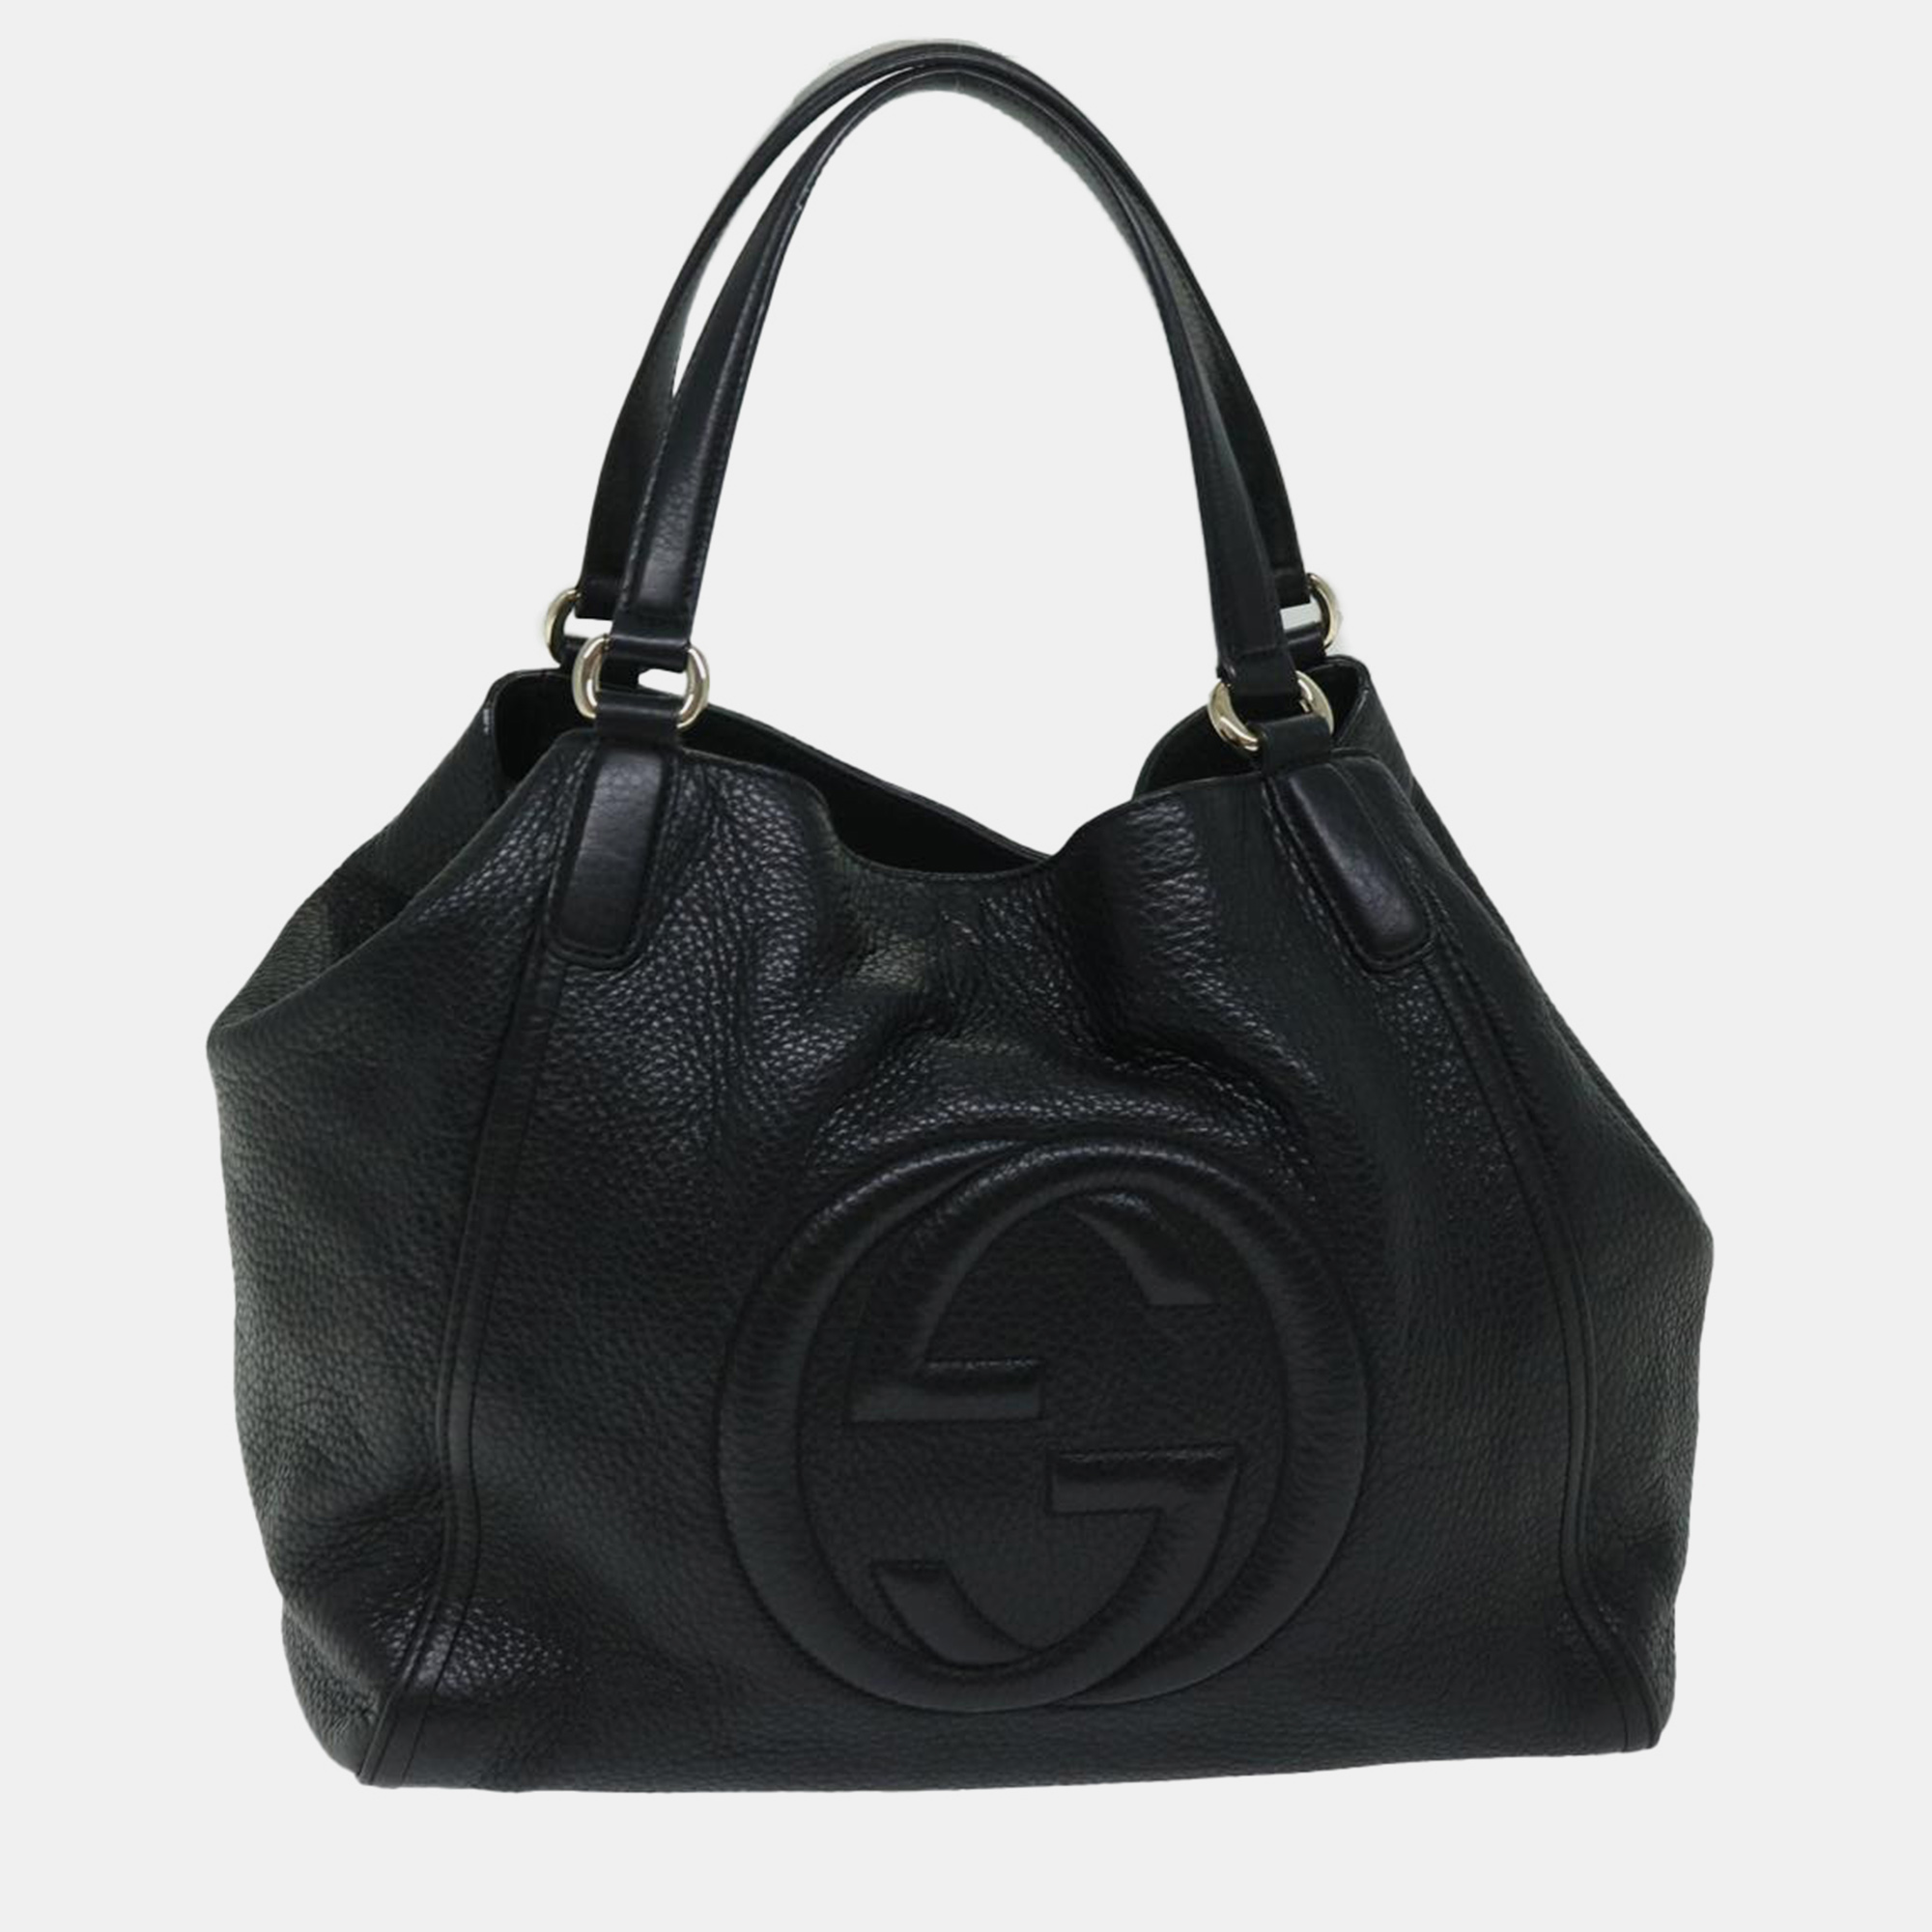 Gucci black leather gg soho bag